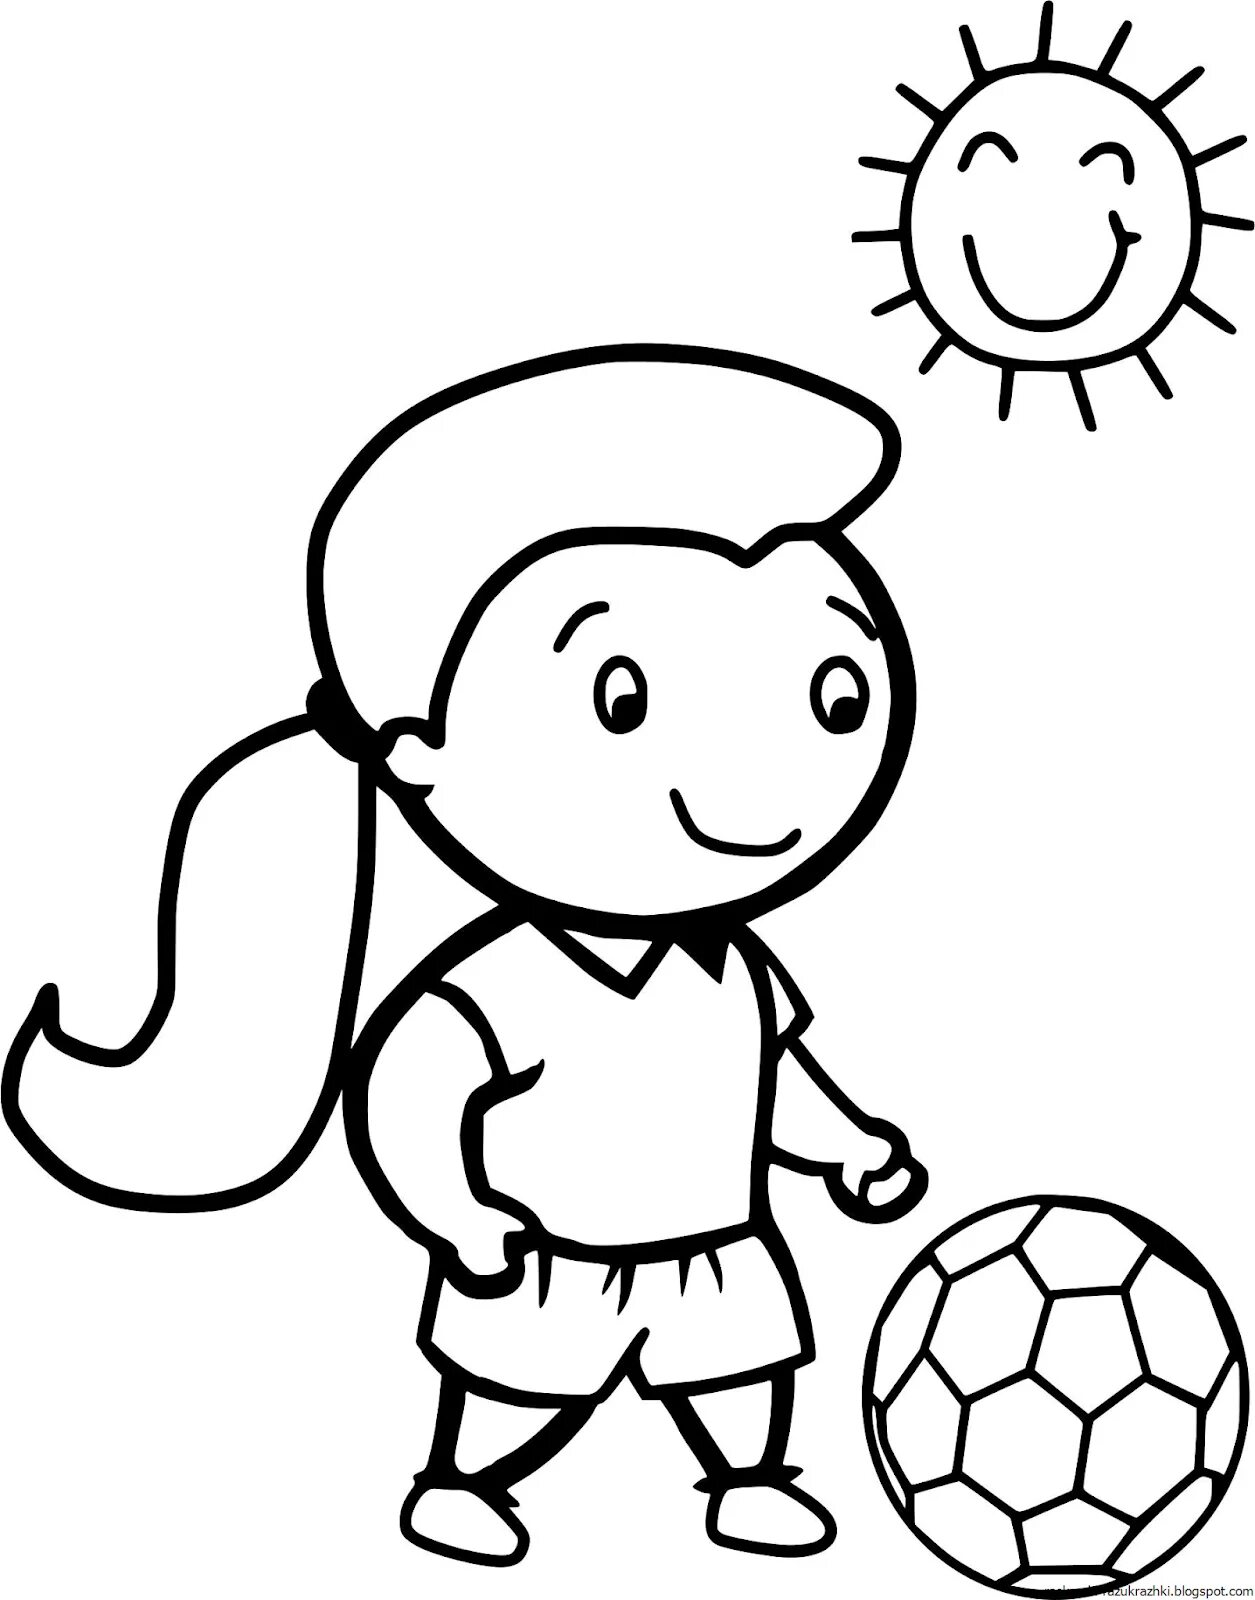 Color-fiesta sports coloring page для детей 3-4 лет